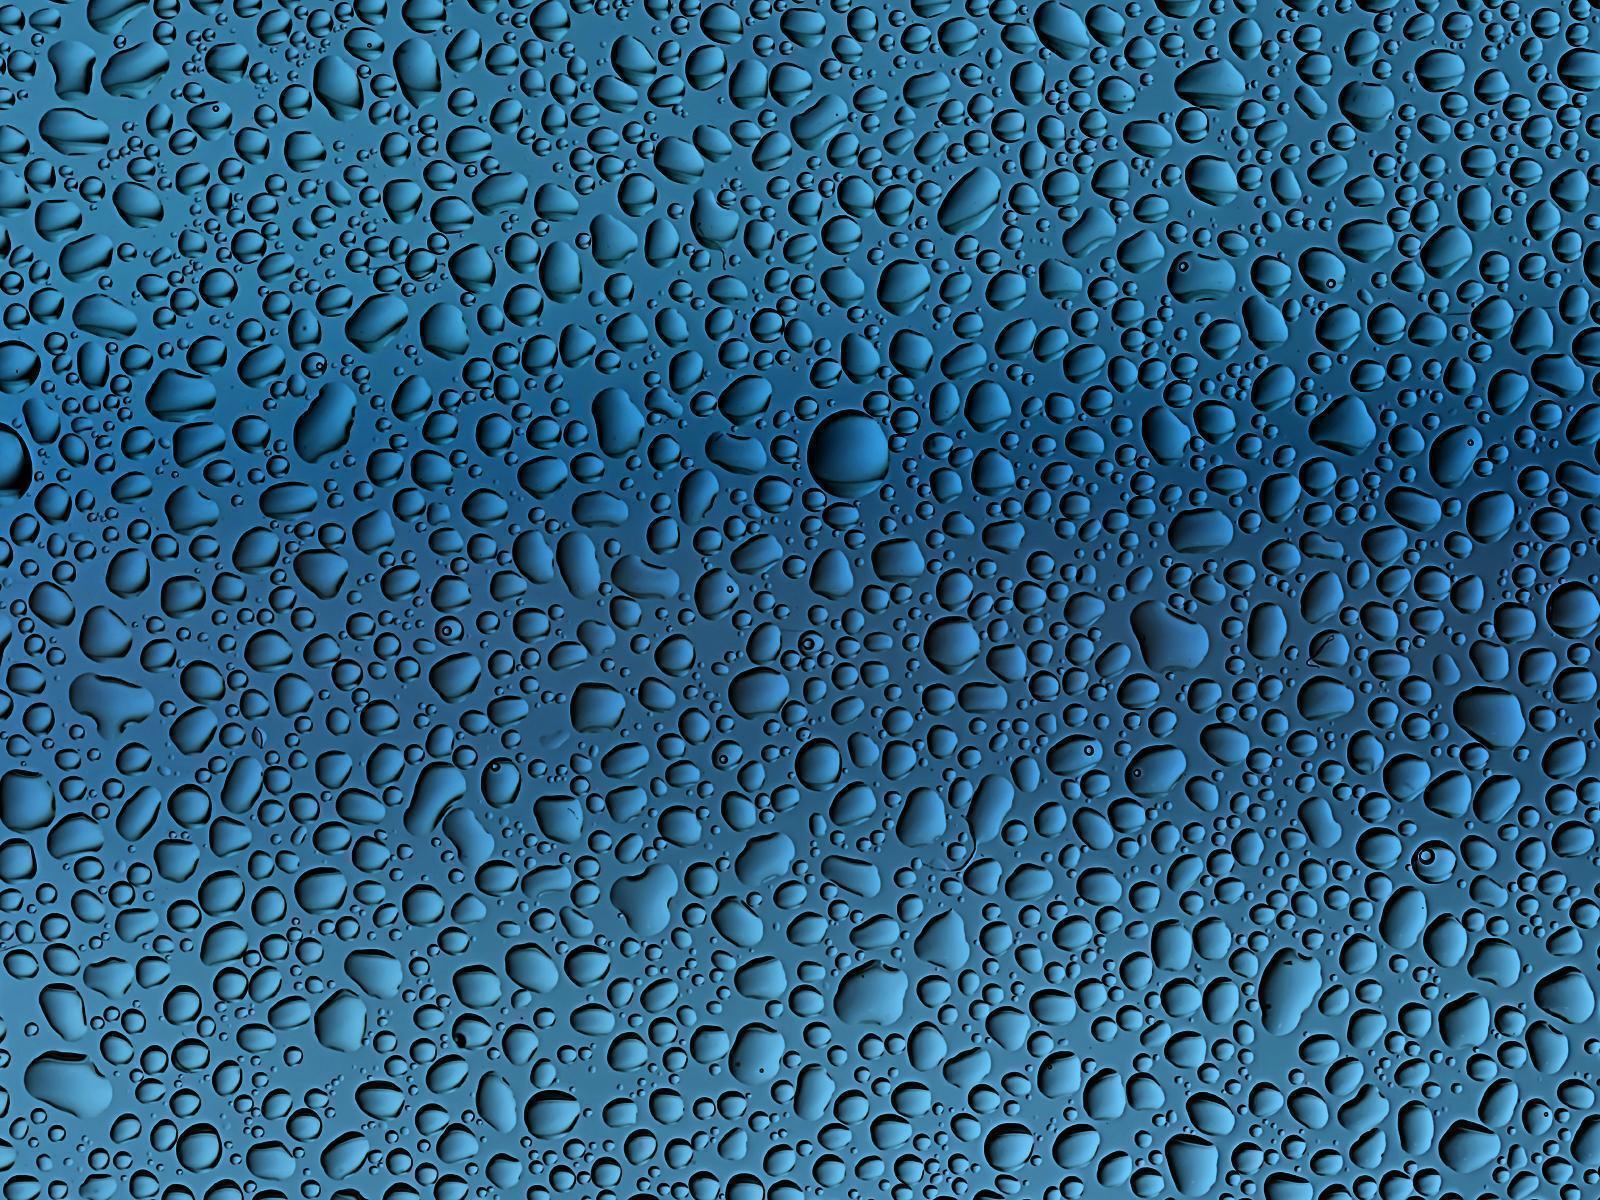 Smokey Blue Water Drops wallpaper, Green Water Drops wallpaper